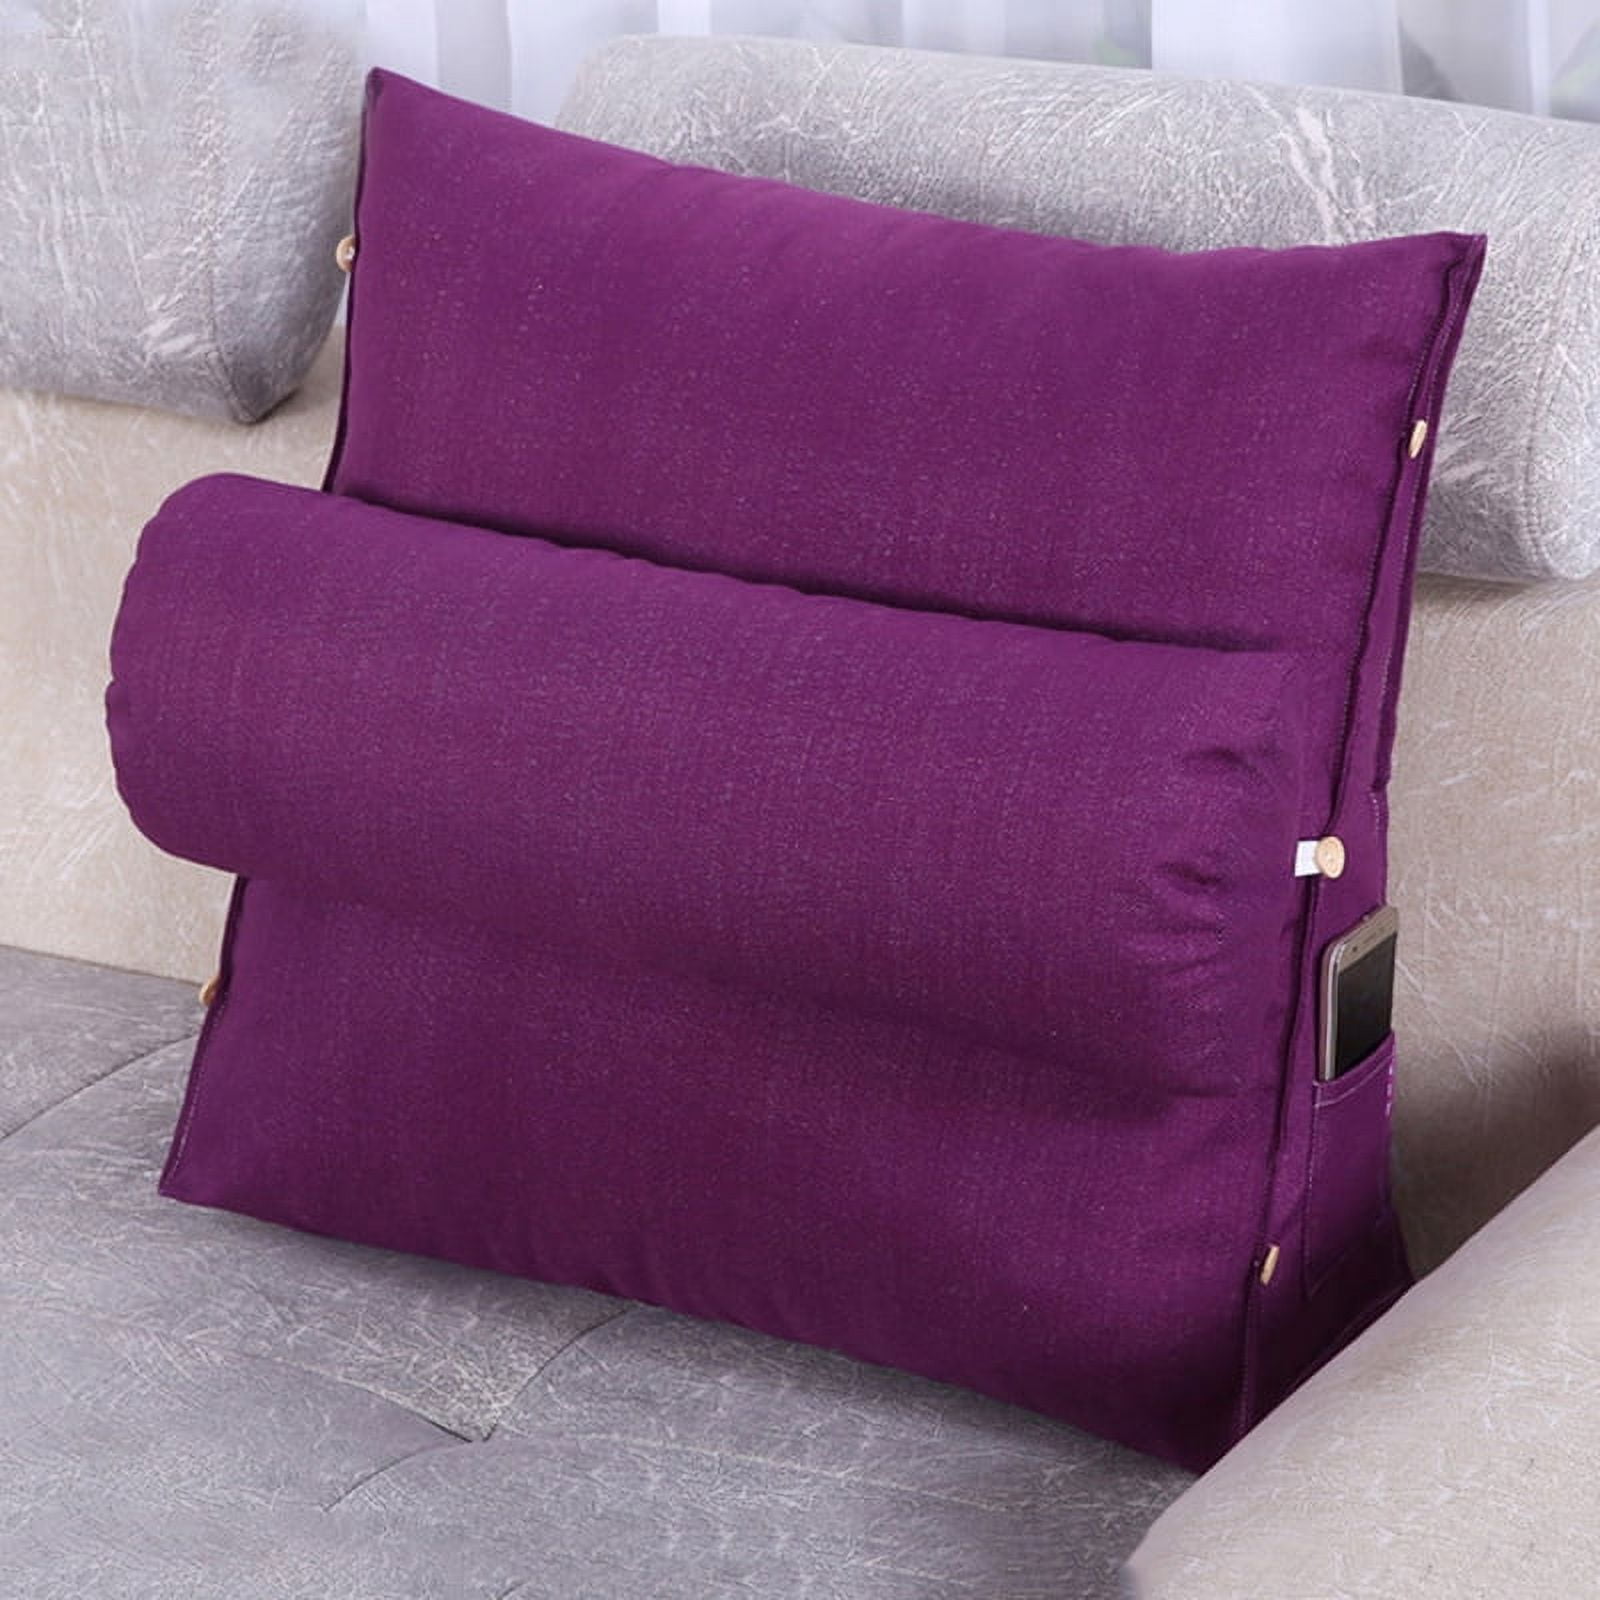 1pc Velvet Purple Cushion, One Slow Rebound Memory Foam Hip